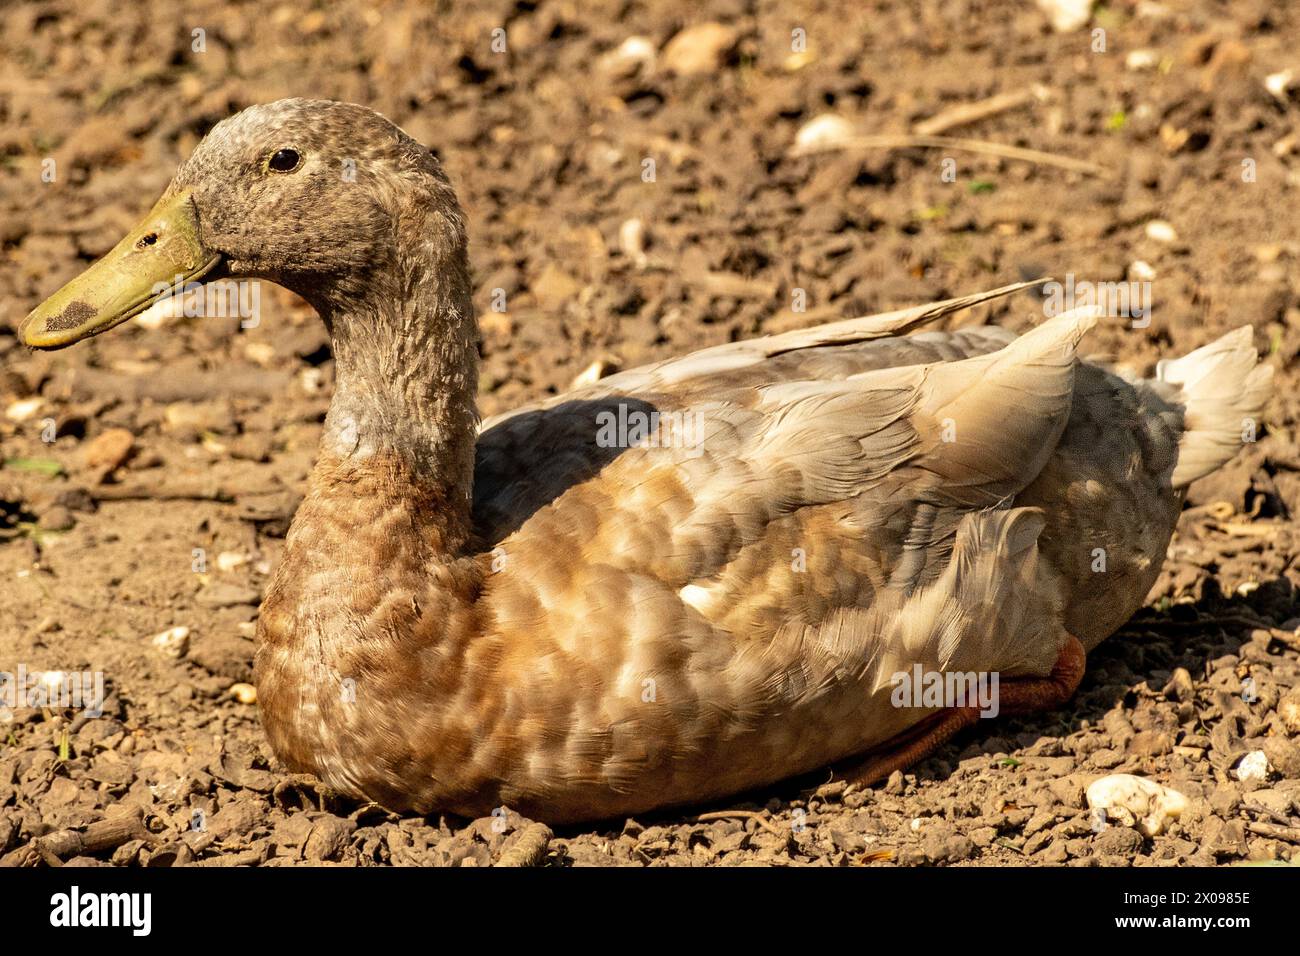 the duck is sleeping Stock Photo